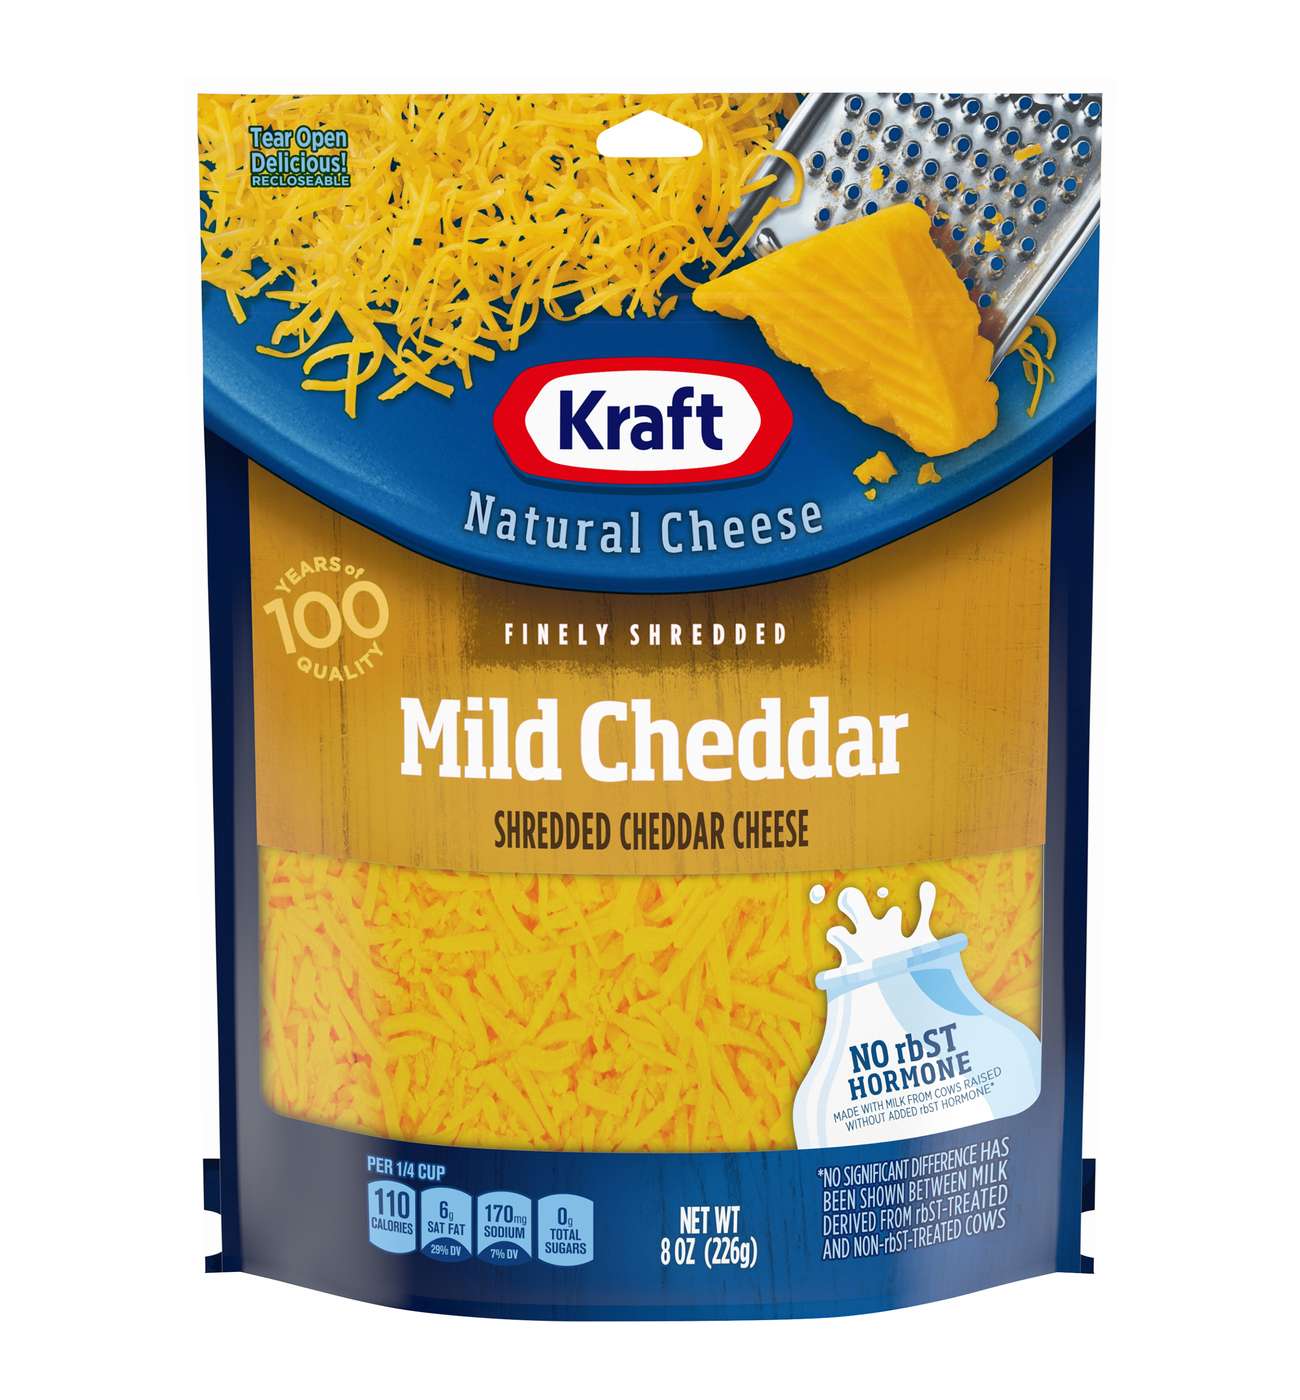 Kraft Mild Cheddar Finely Shredded Cheese; image 1 of 4